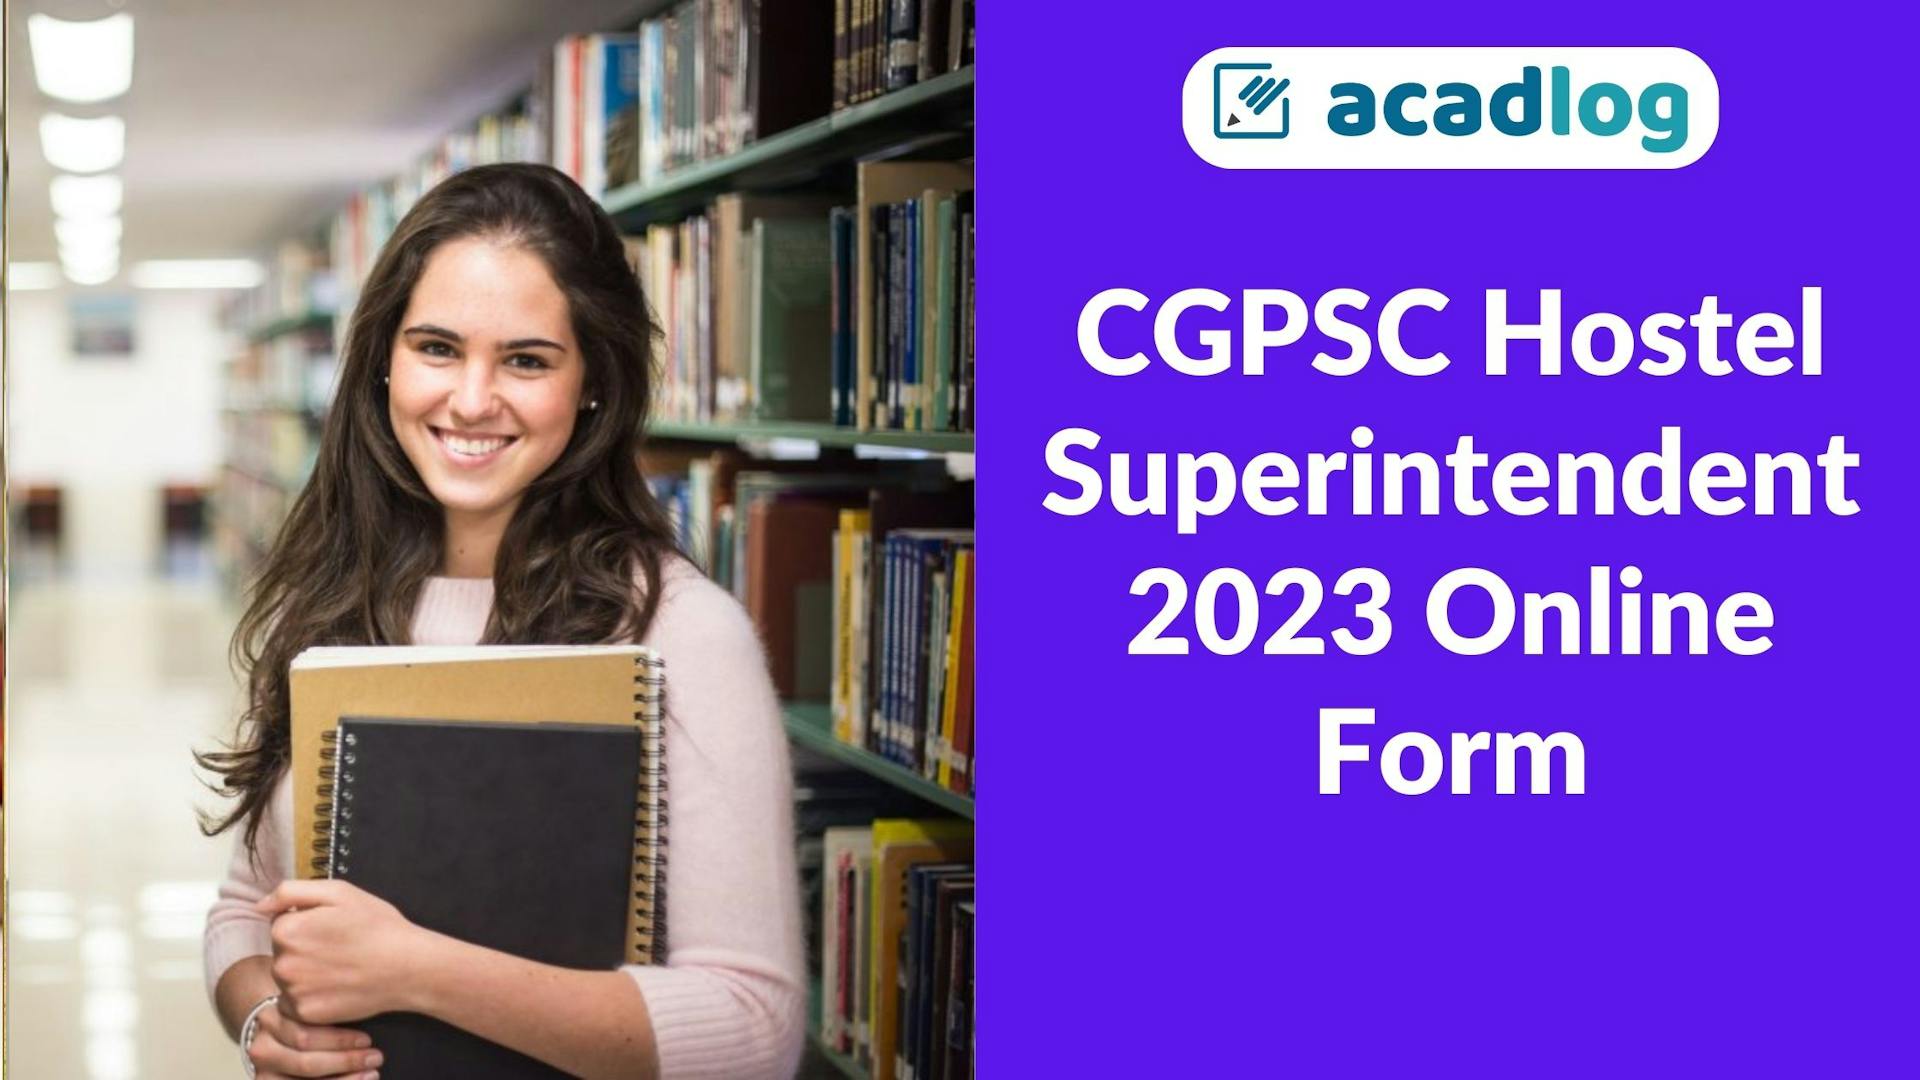 CGPSC Hostel Superintendent 2023 Online Form